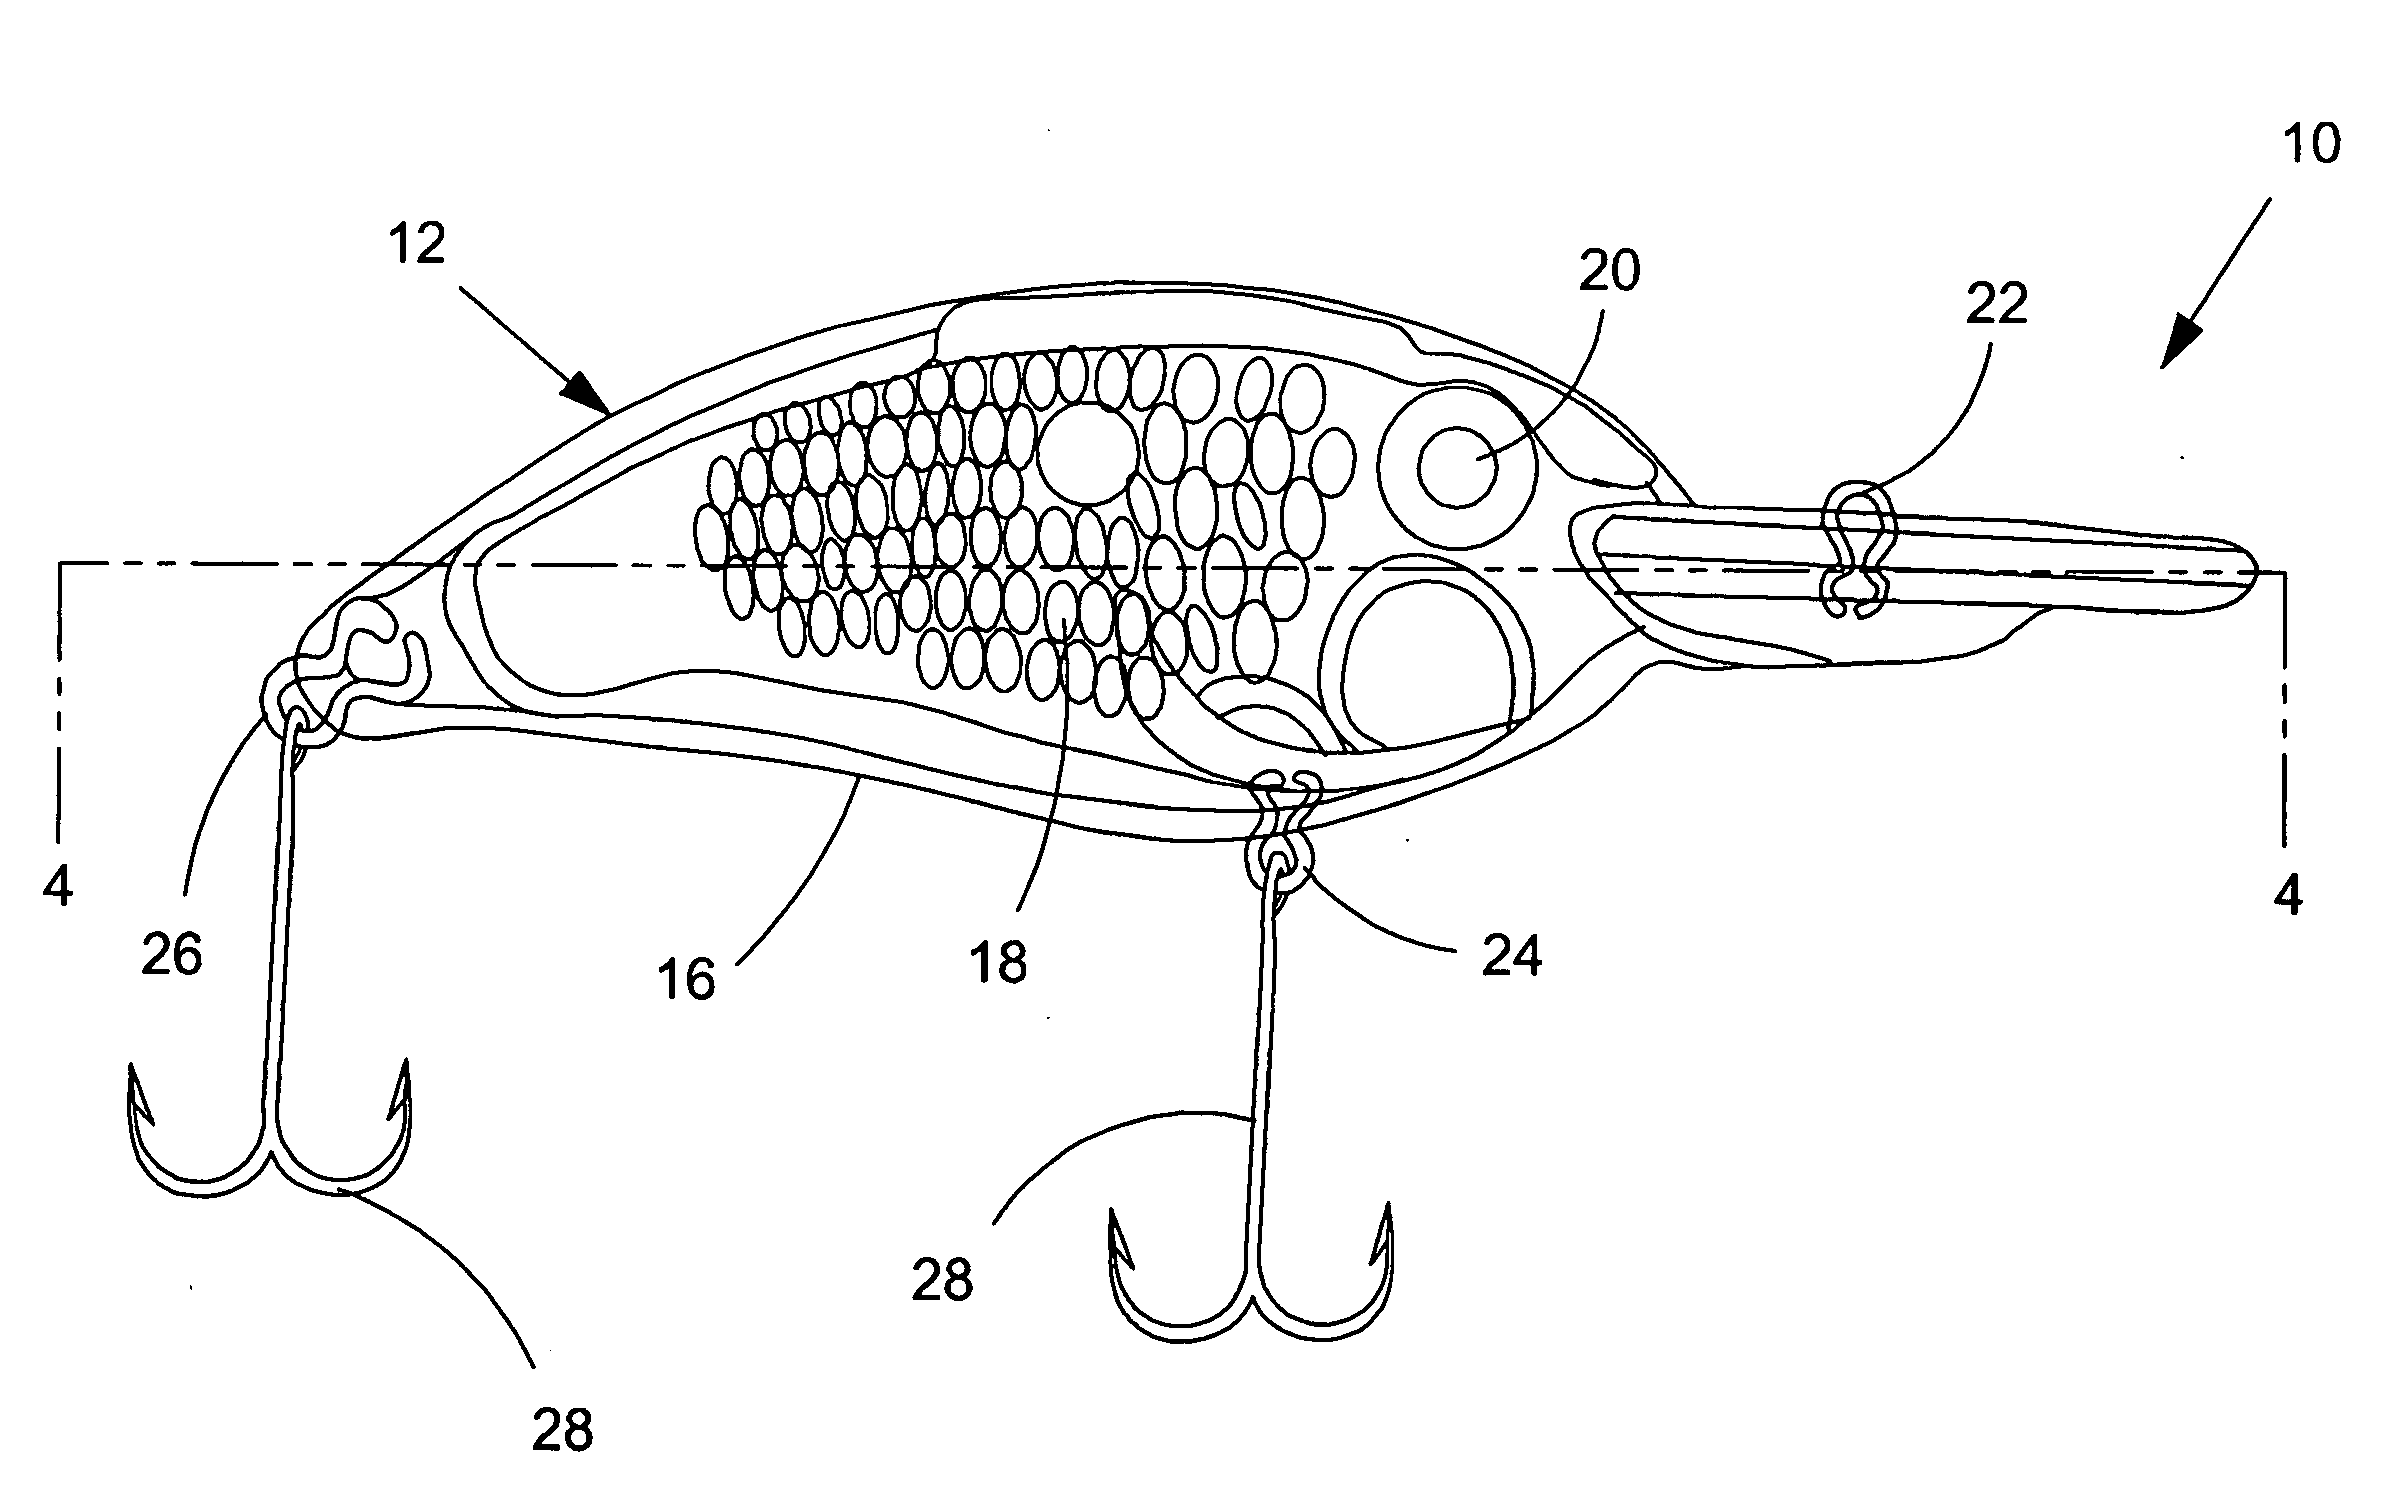 Electronic fishing lure